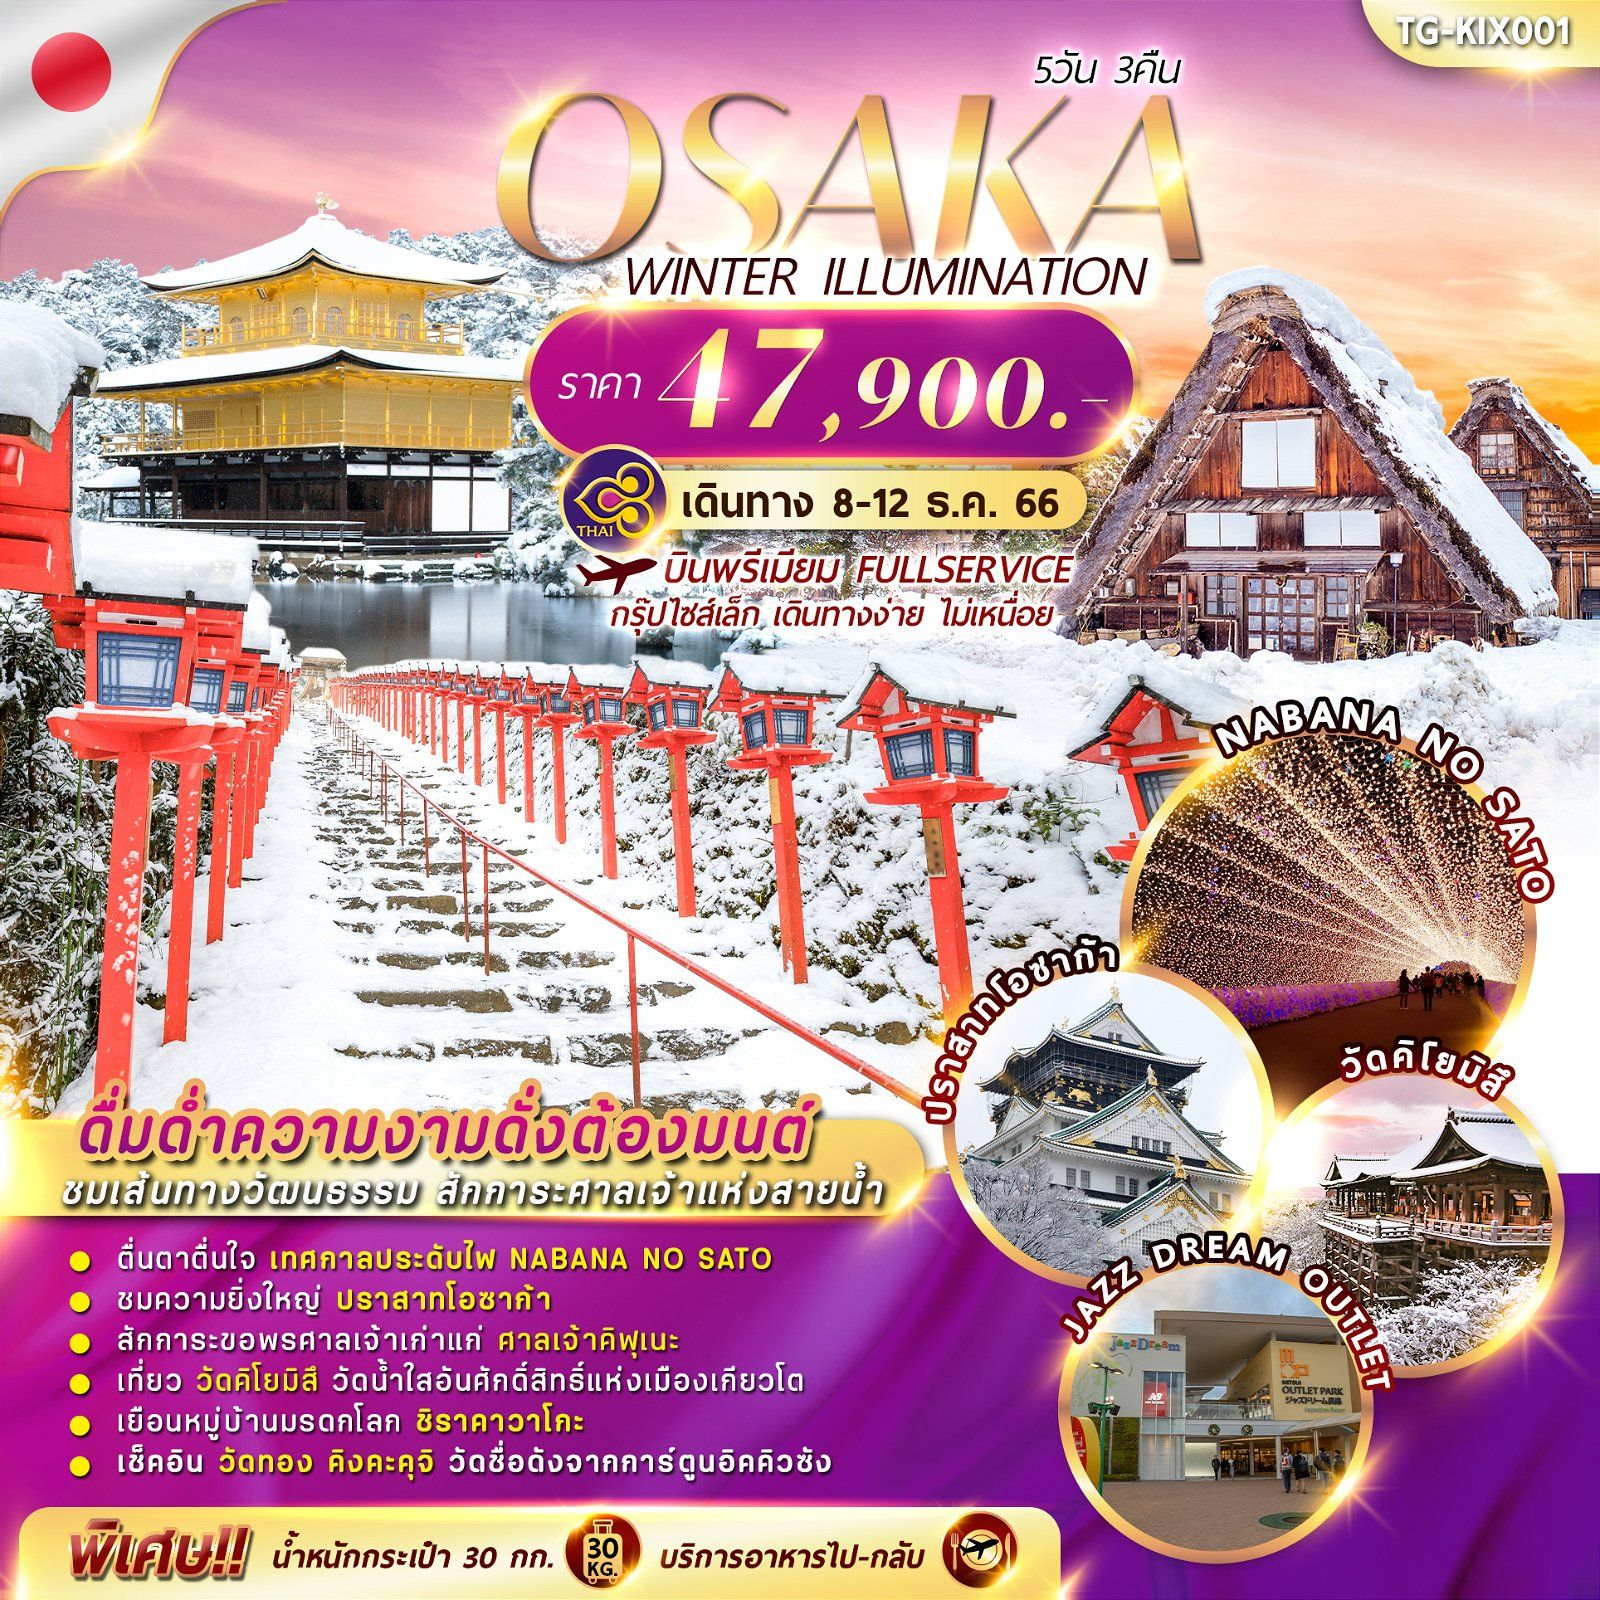 OSAKA WINTER ILLUMINATION 5D3N by TG